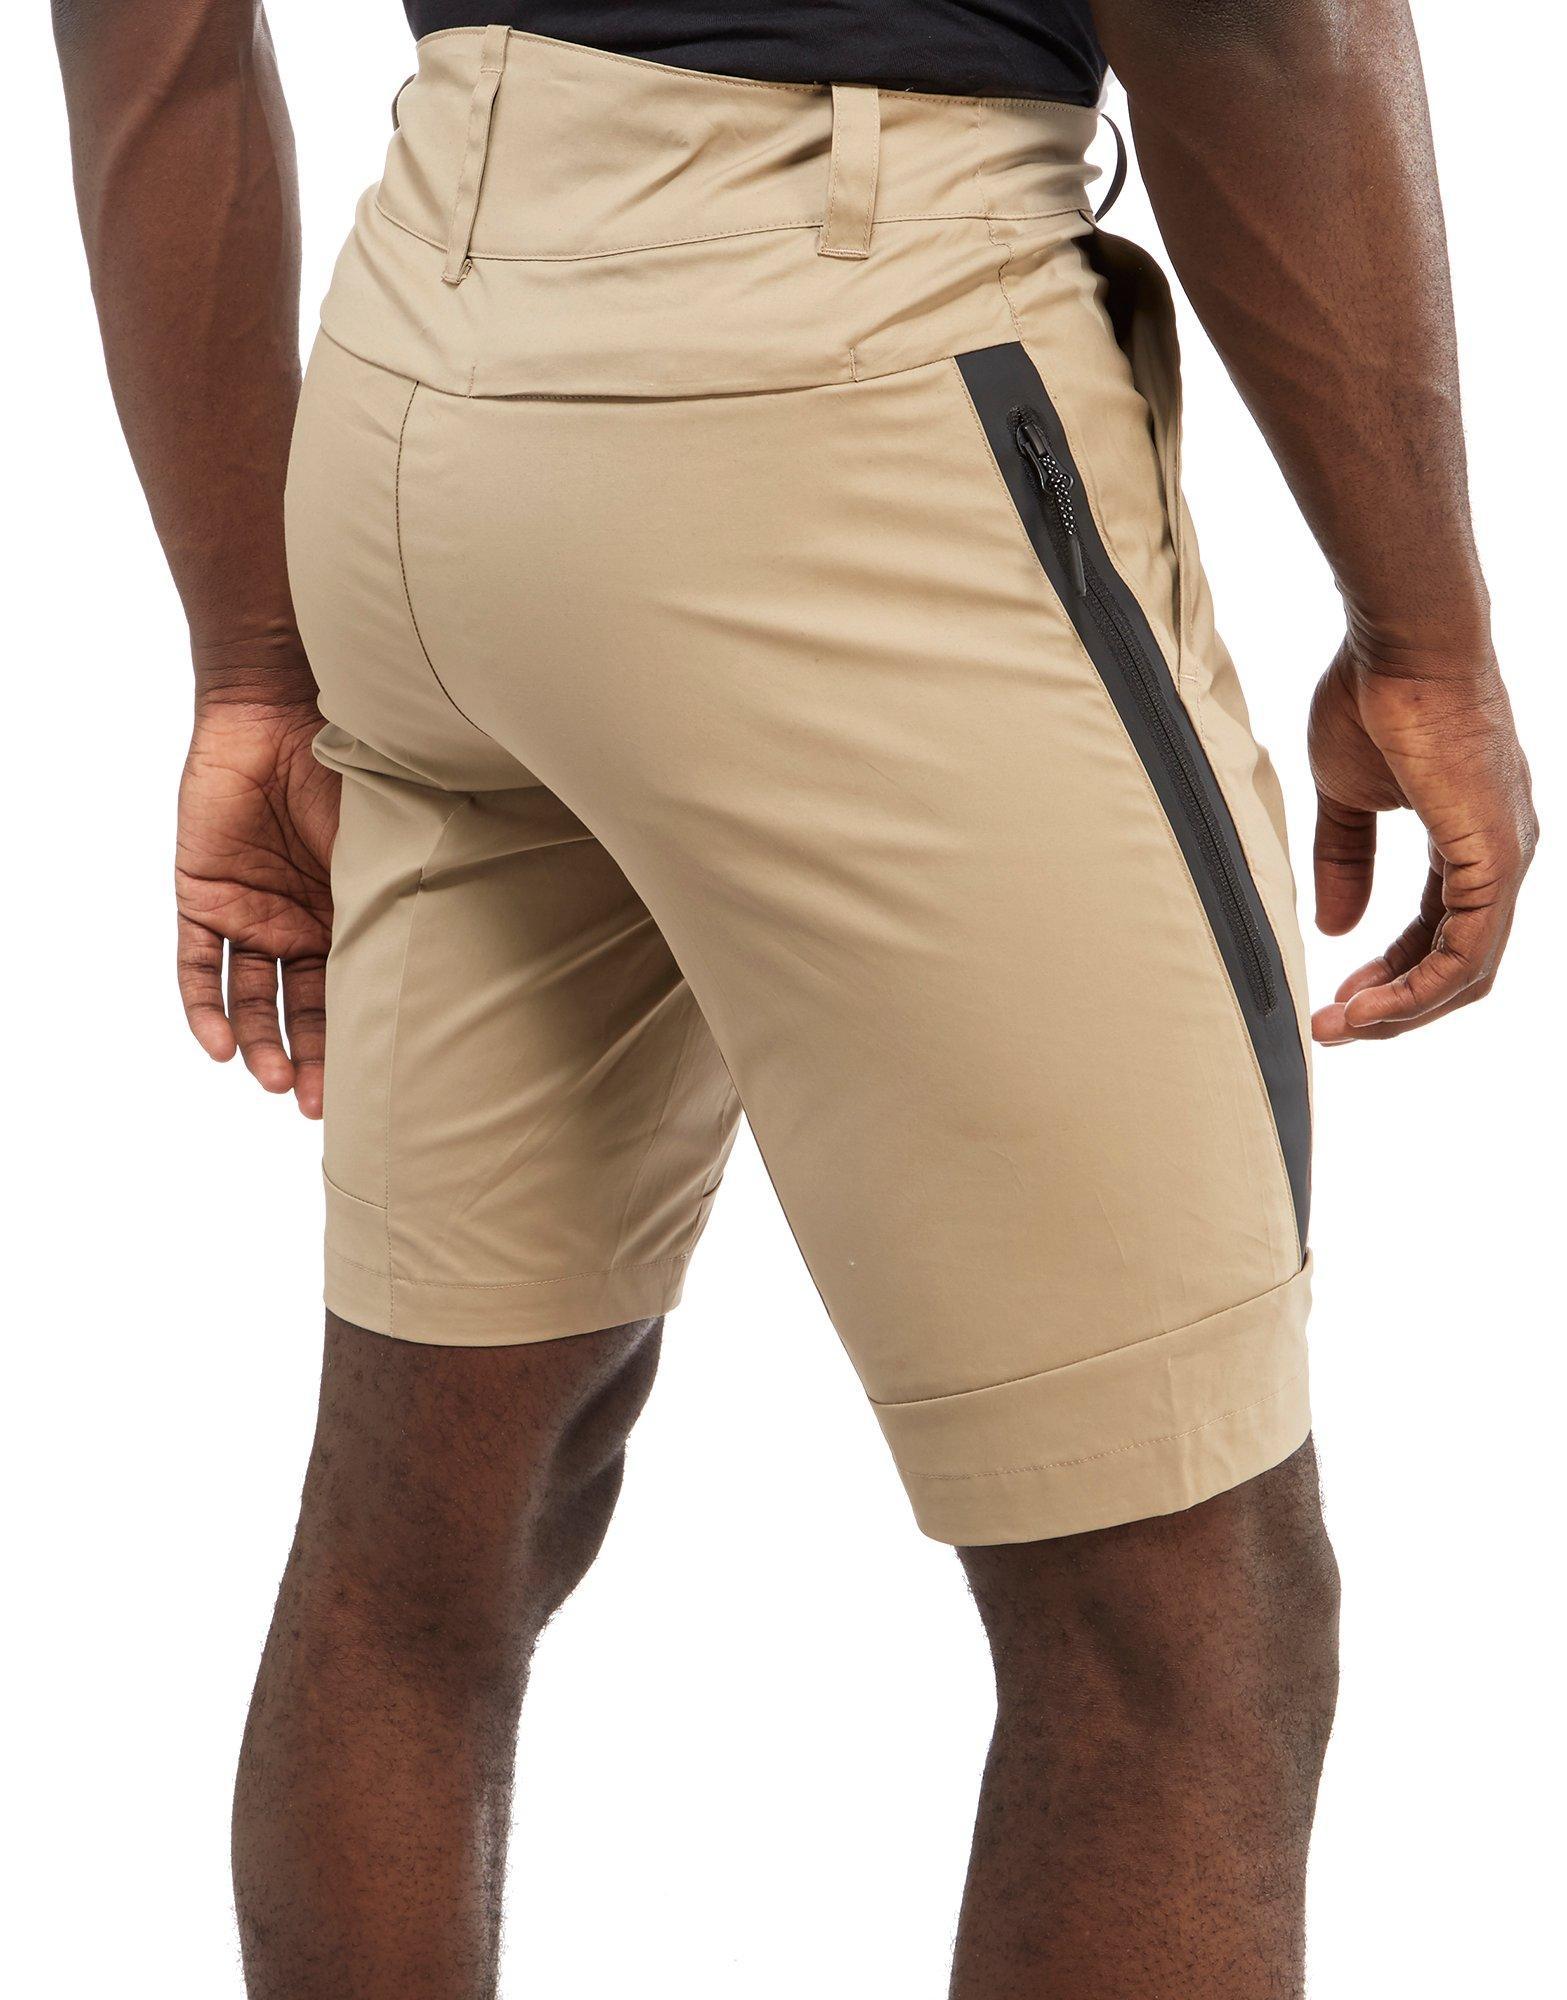 Nike Cotton Tech Chino Shorts in Khaki (Natural) for Men - Lyst